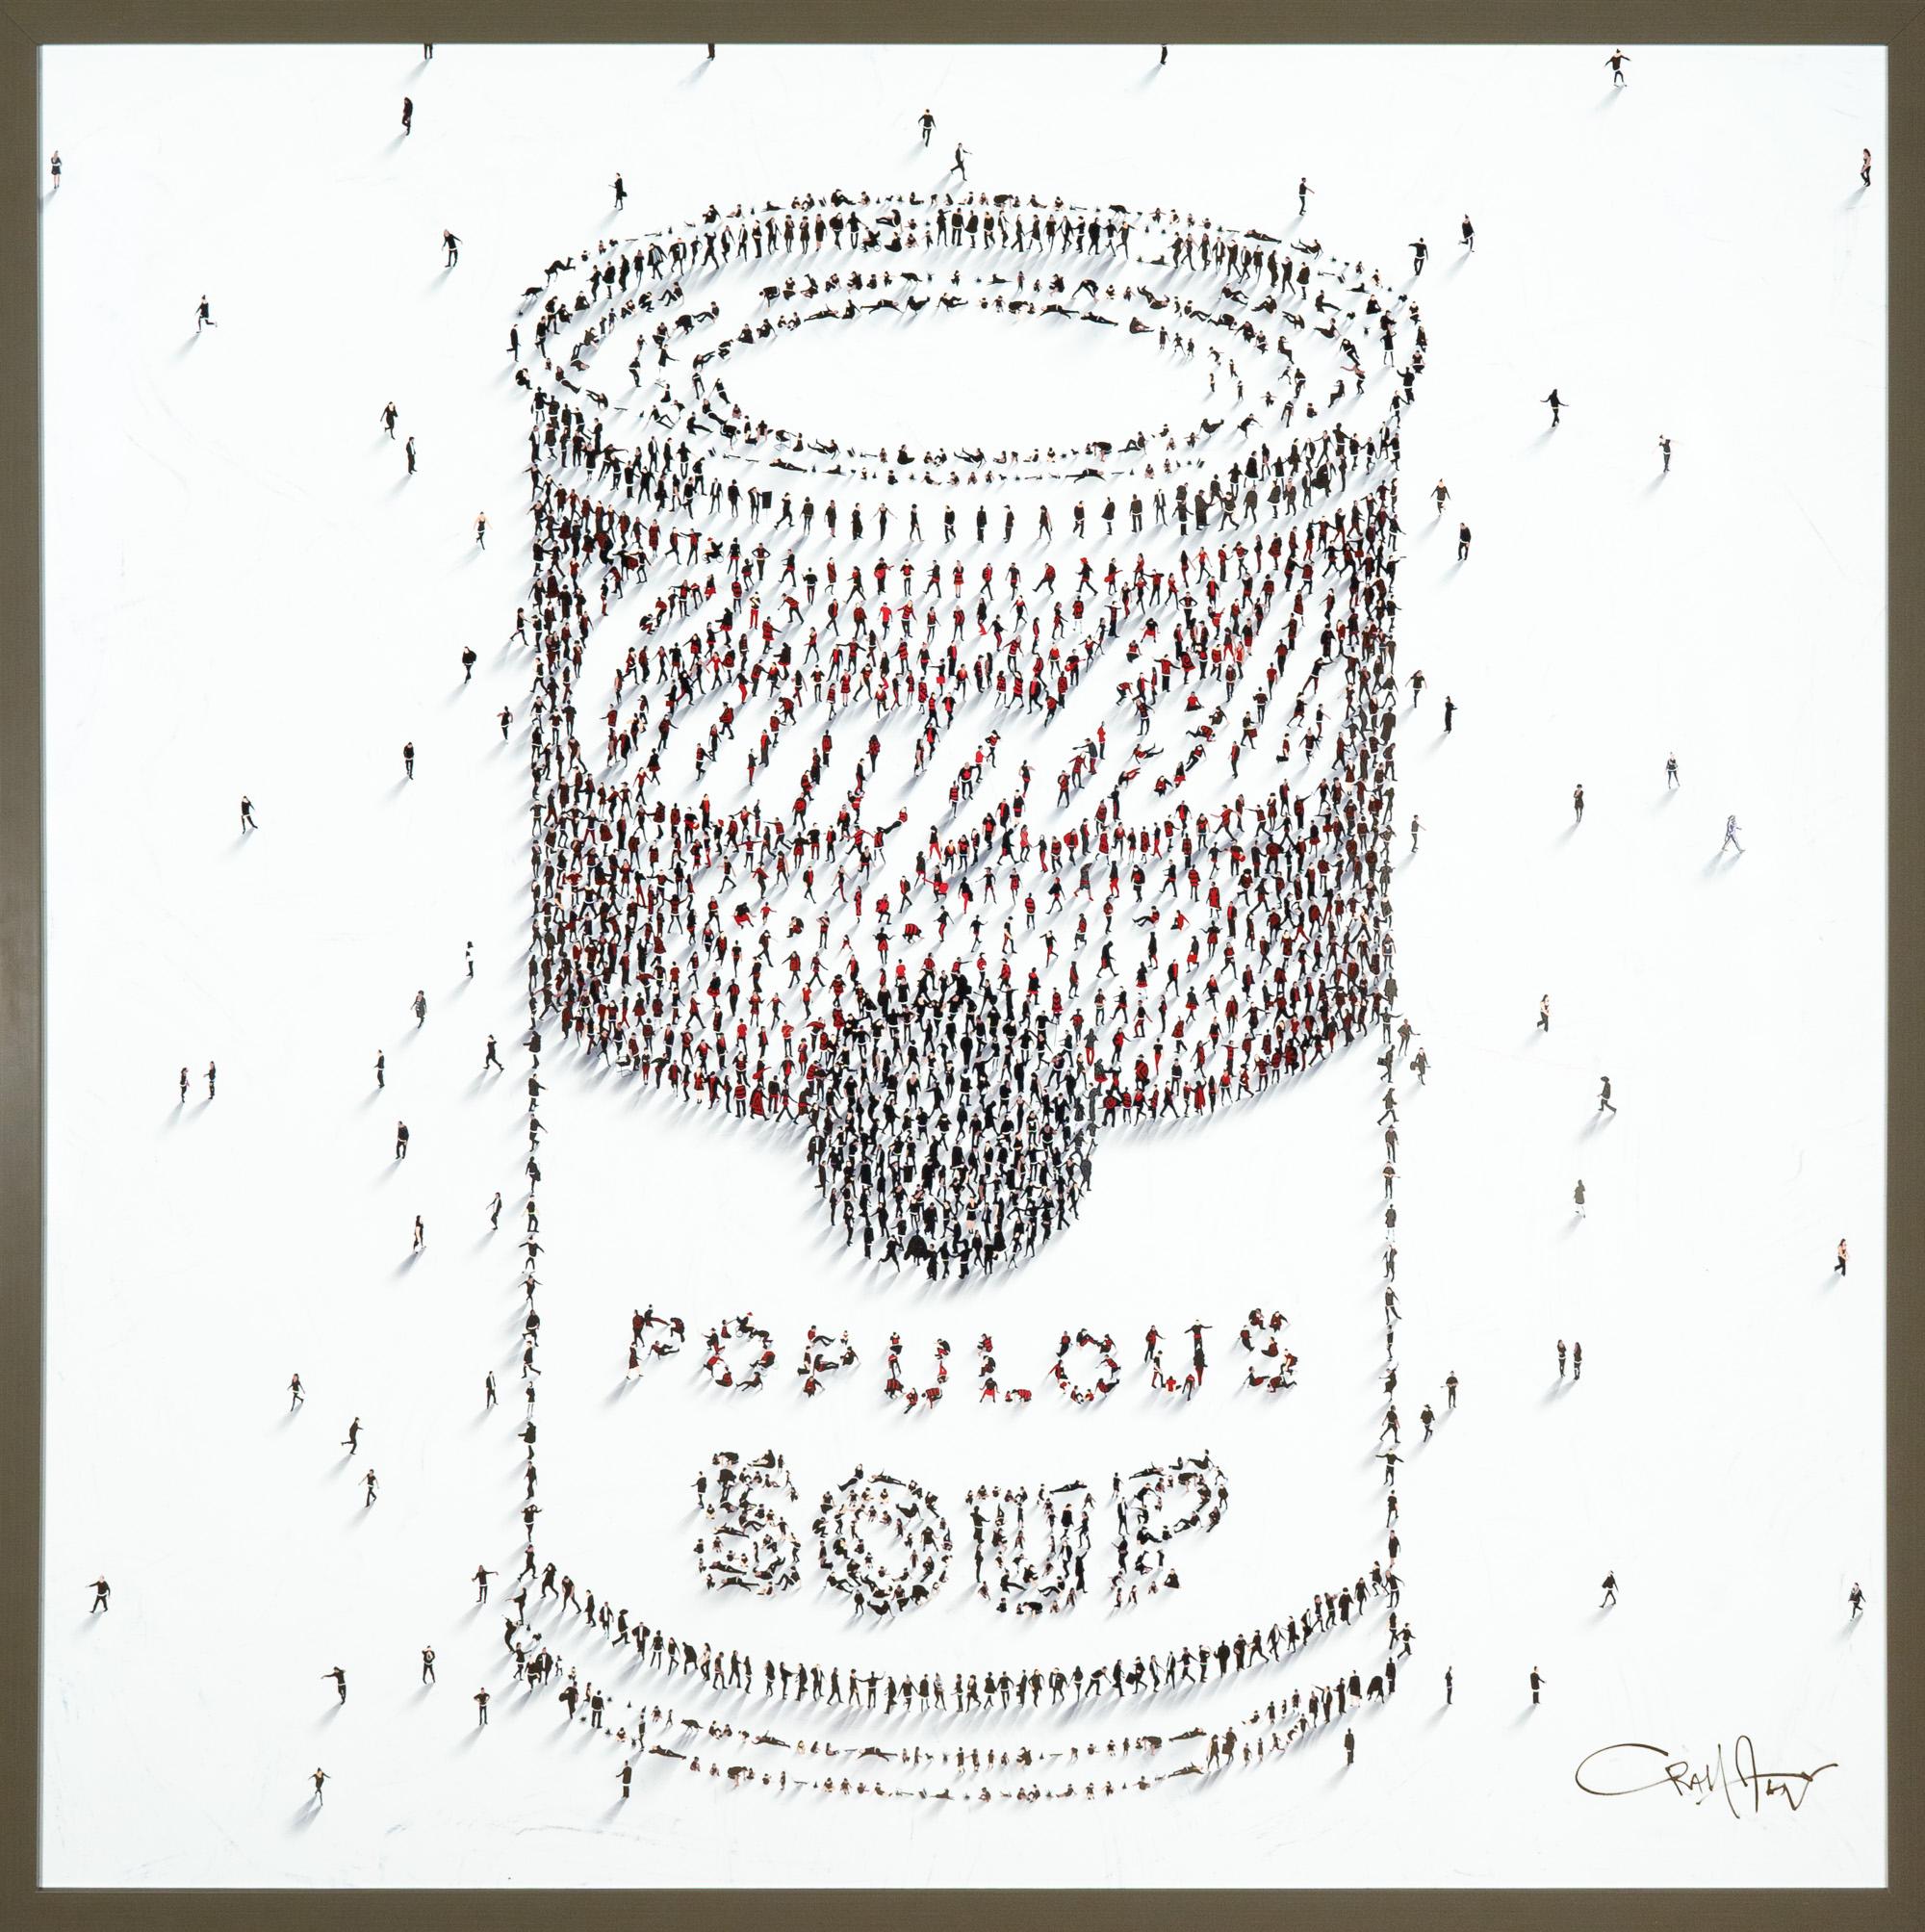 "Populus: Soup" Contemporary Figurative Pop Art Chrome Mixed Media on Metal - Mixed Media Art by Craig Alan